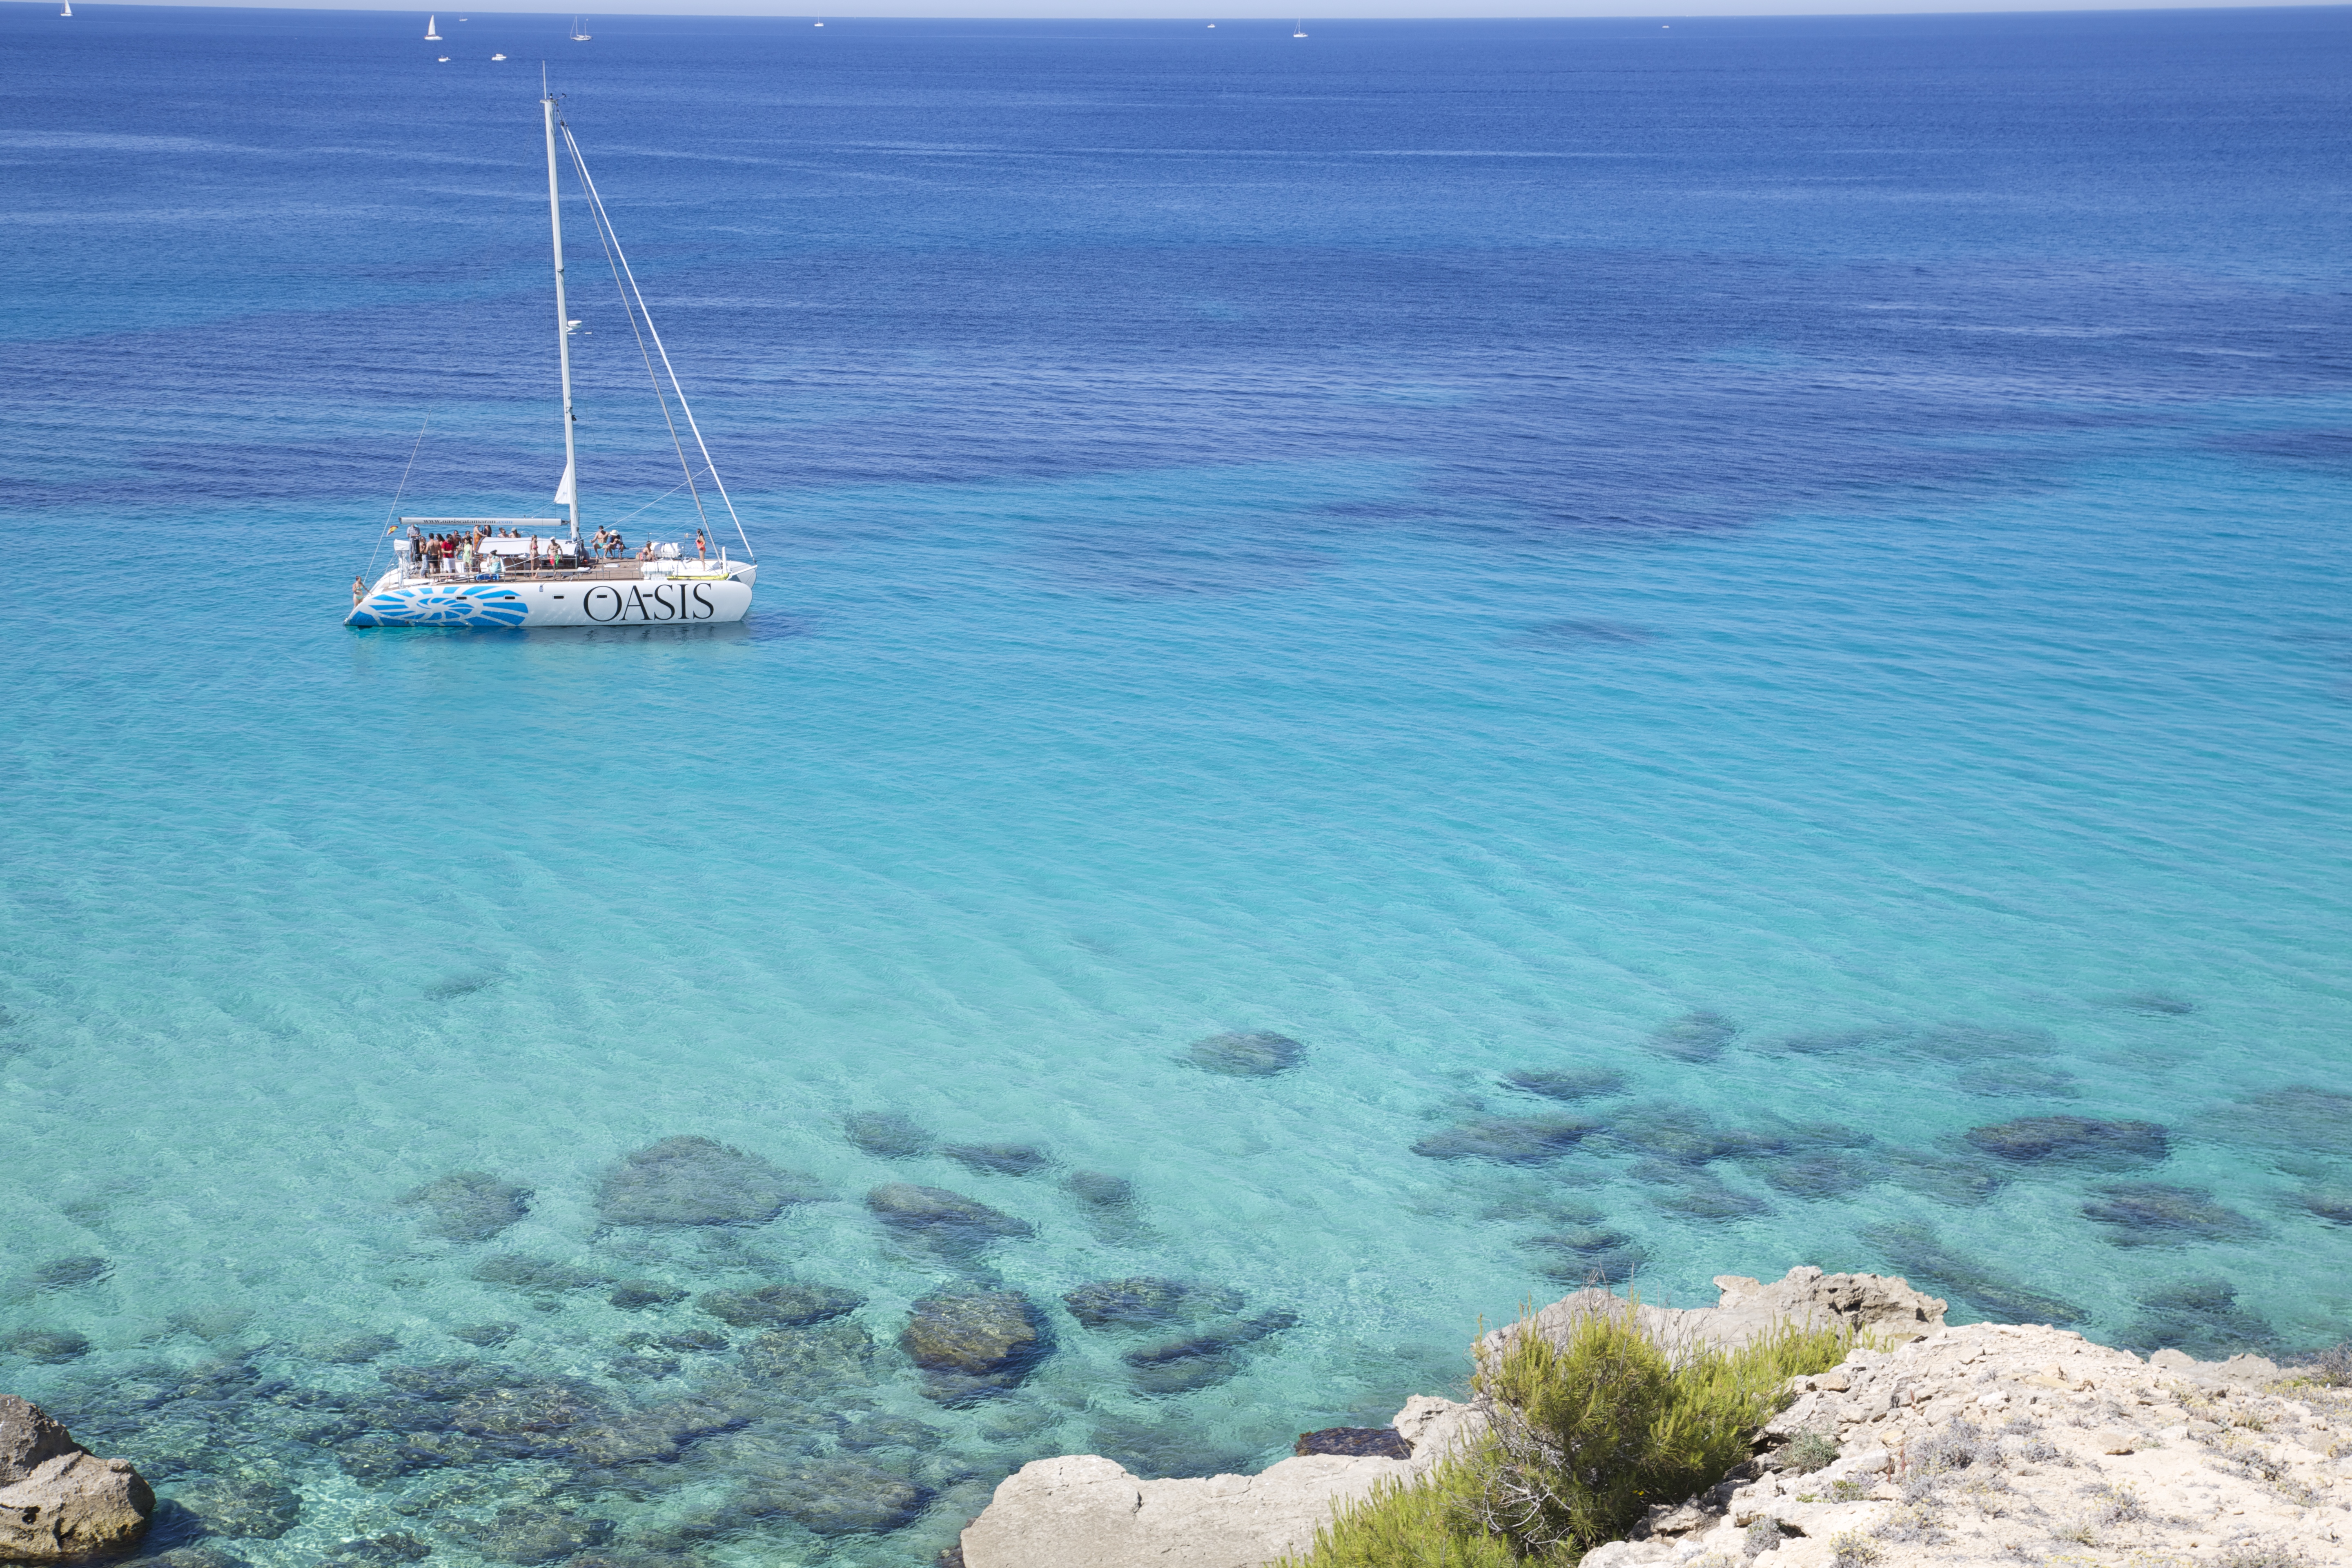 Enjoy a day at the Mediterranean Sea